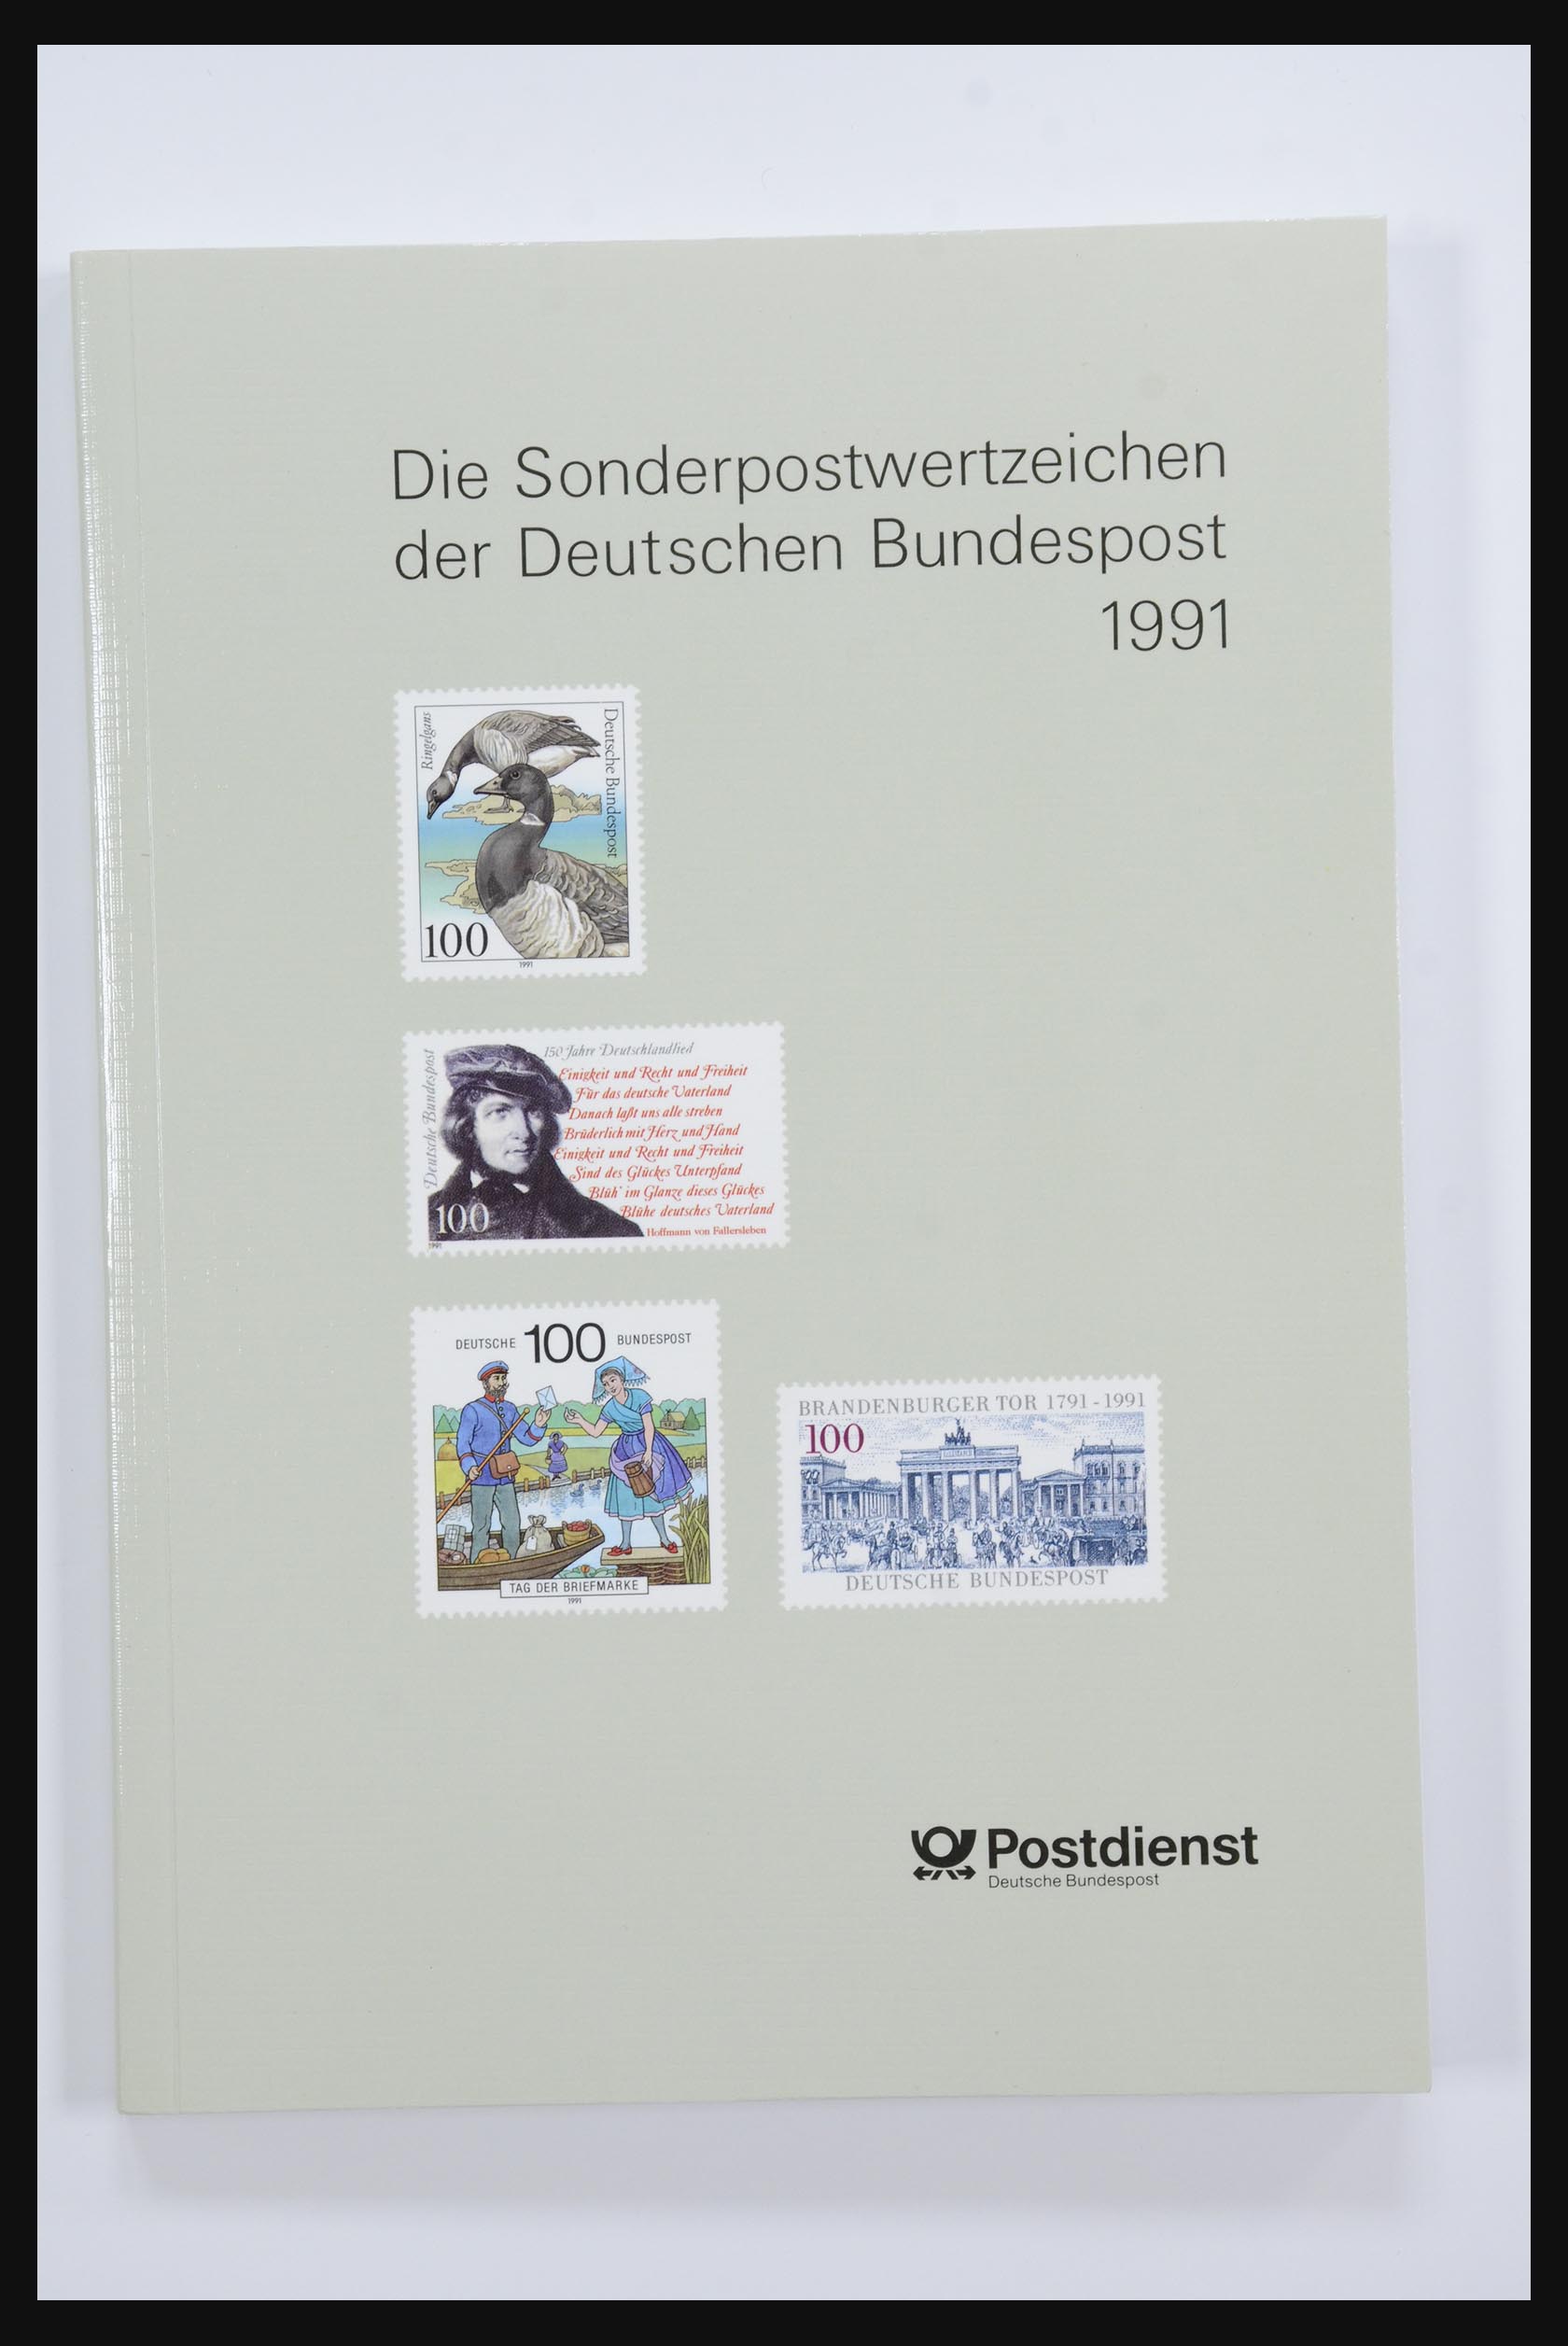 31836 018 - 31836 Bundespost yearbooks 1974-1999.